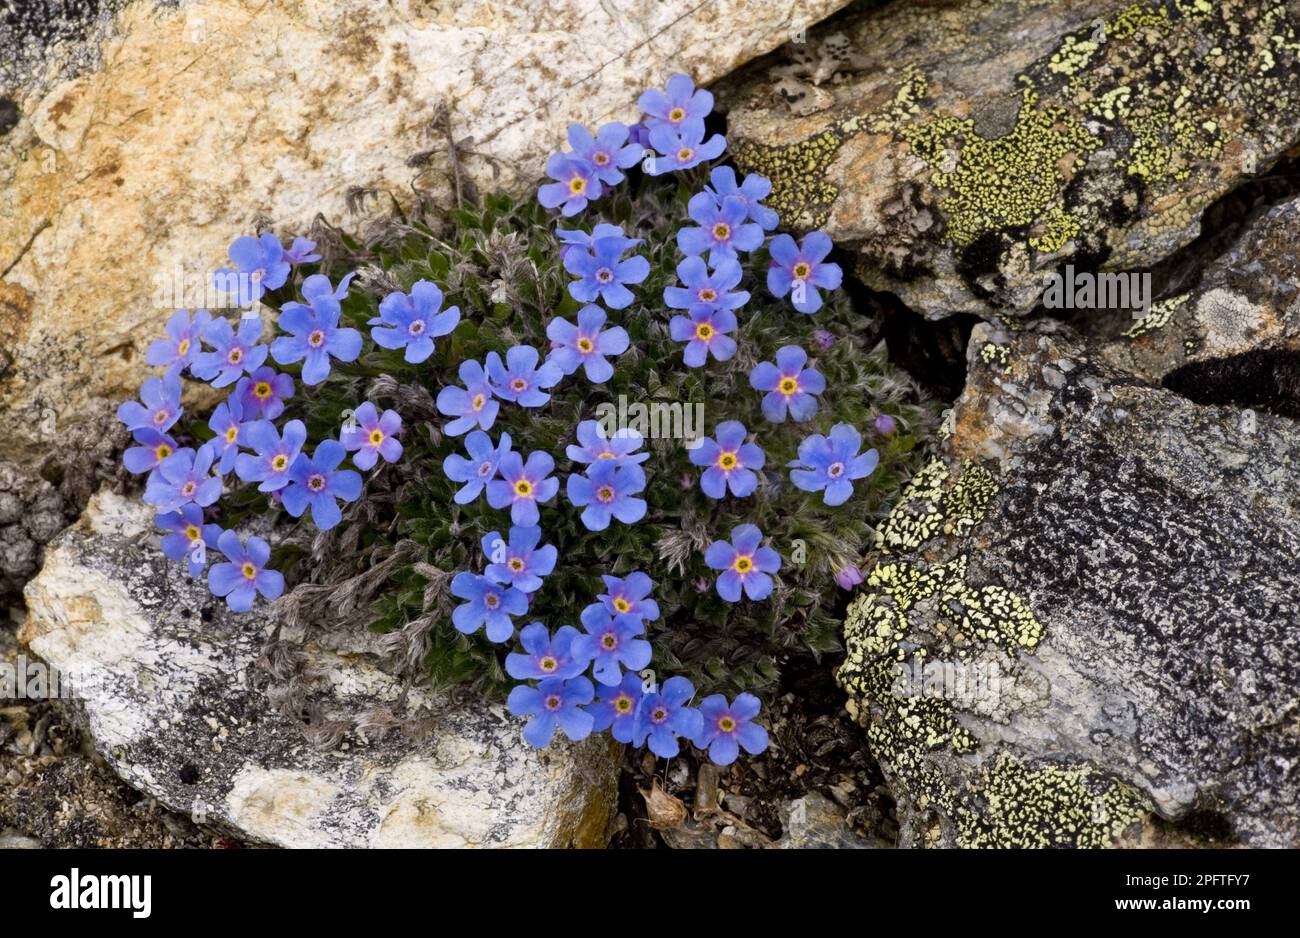 King-of-the-Alps (Eritrichium nanum) flowering, growing at 2900m, Upper Engadin, Swiss Alps, Switzerland Stock Photo